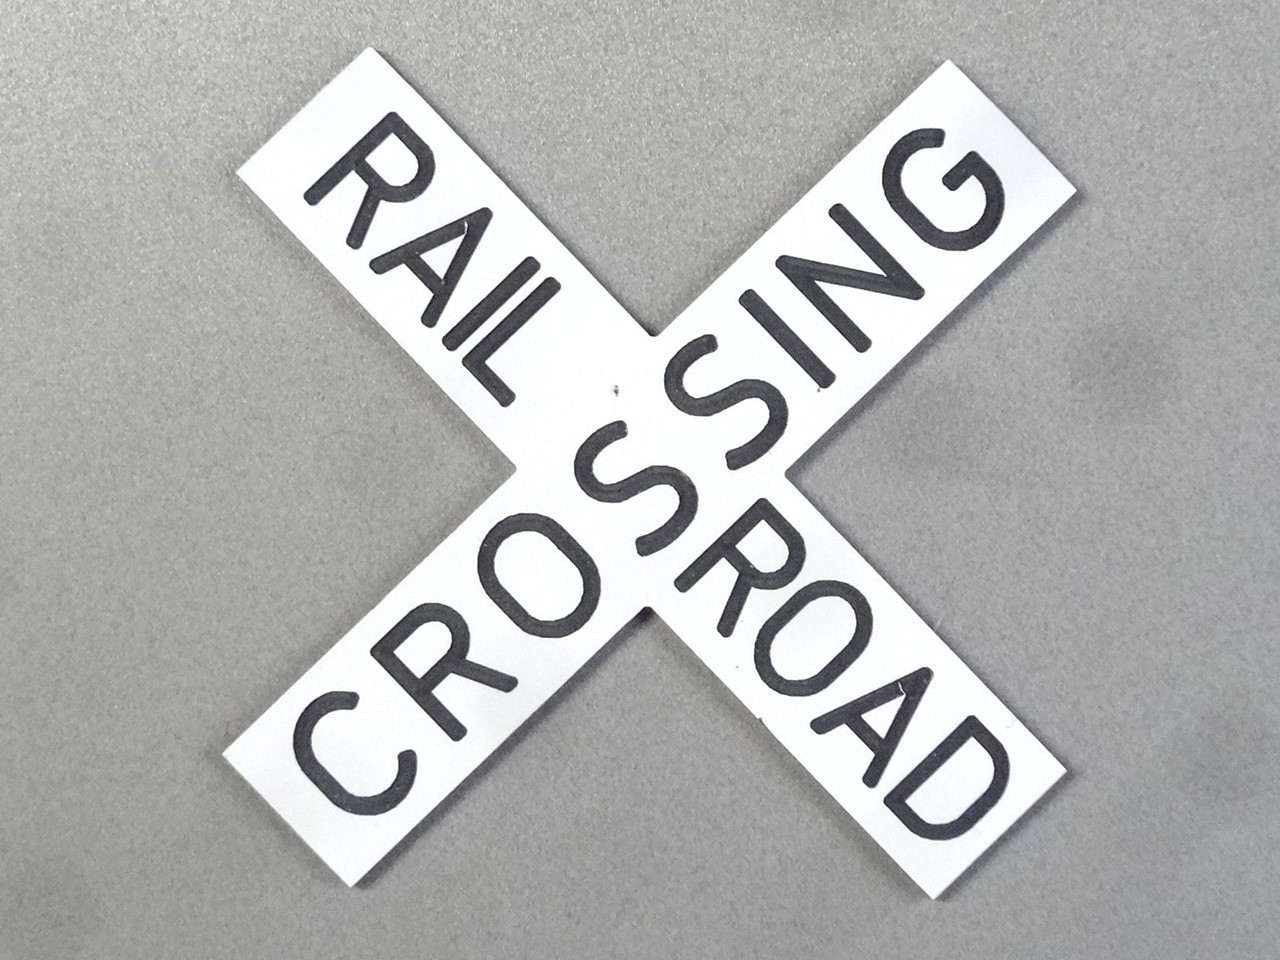 Art. Nr. 07526 - Railroad Crossing - Wetterfester Zweischichtkunststoff